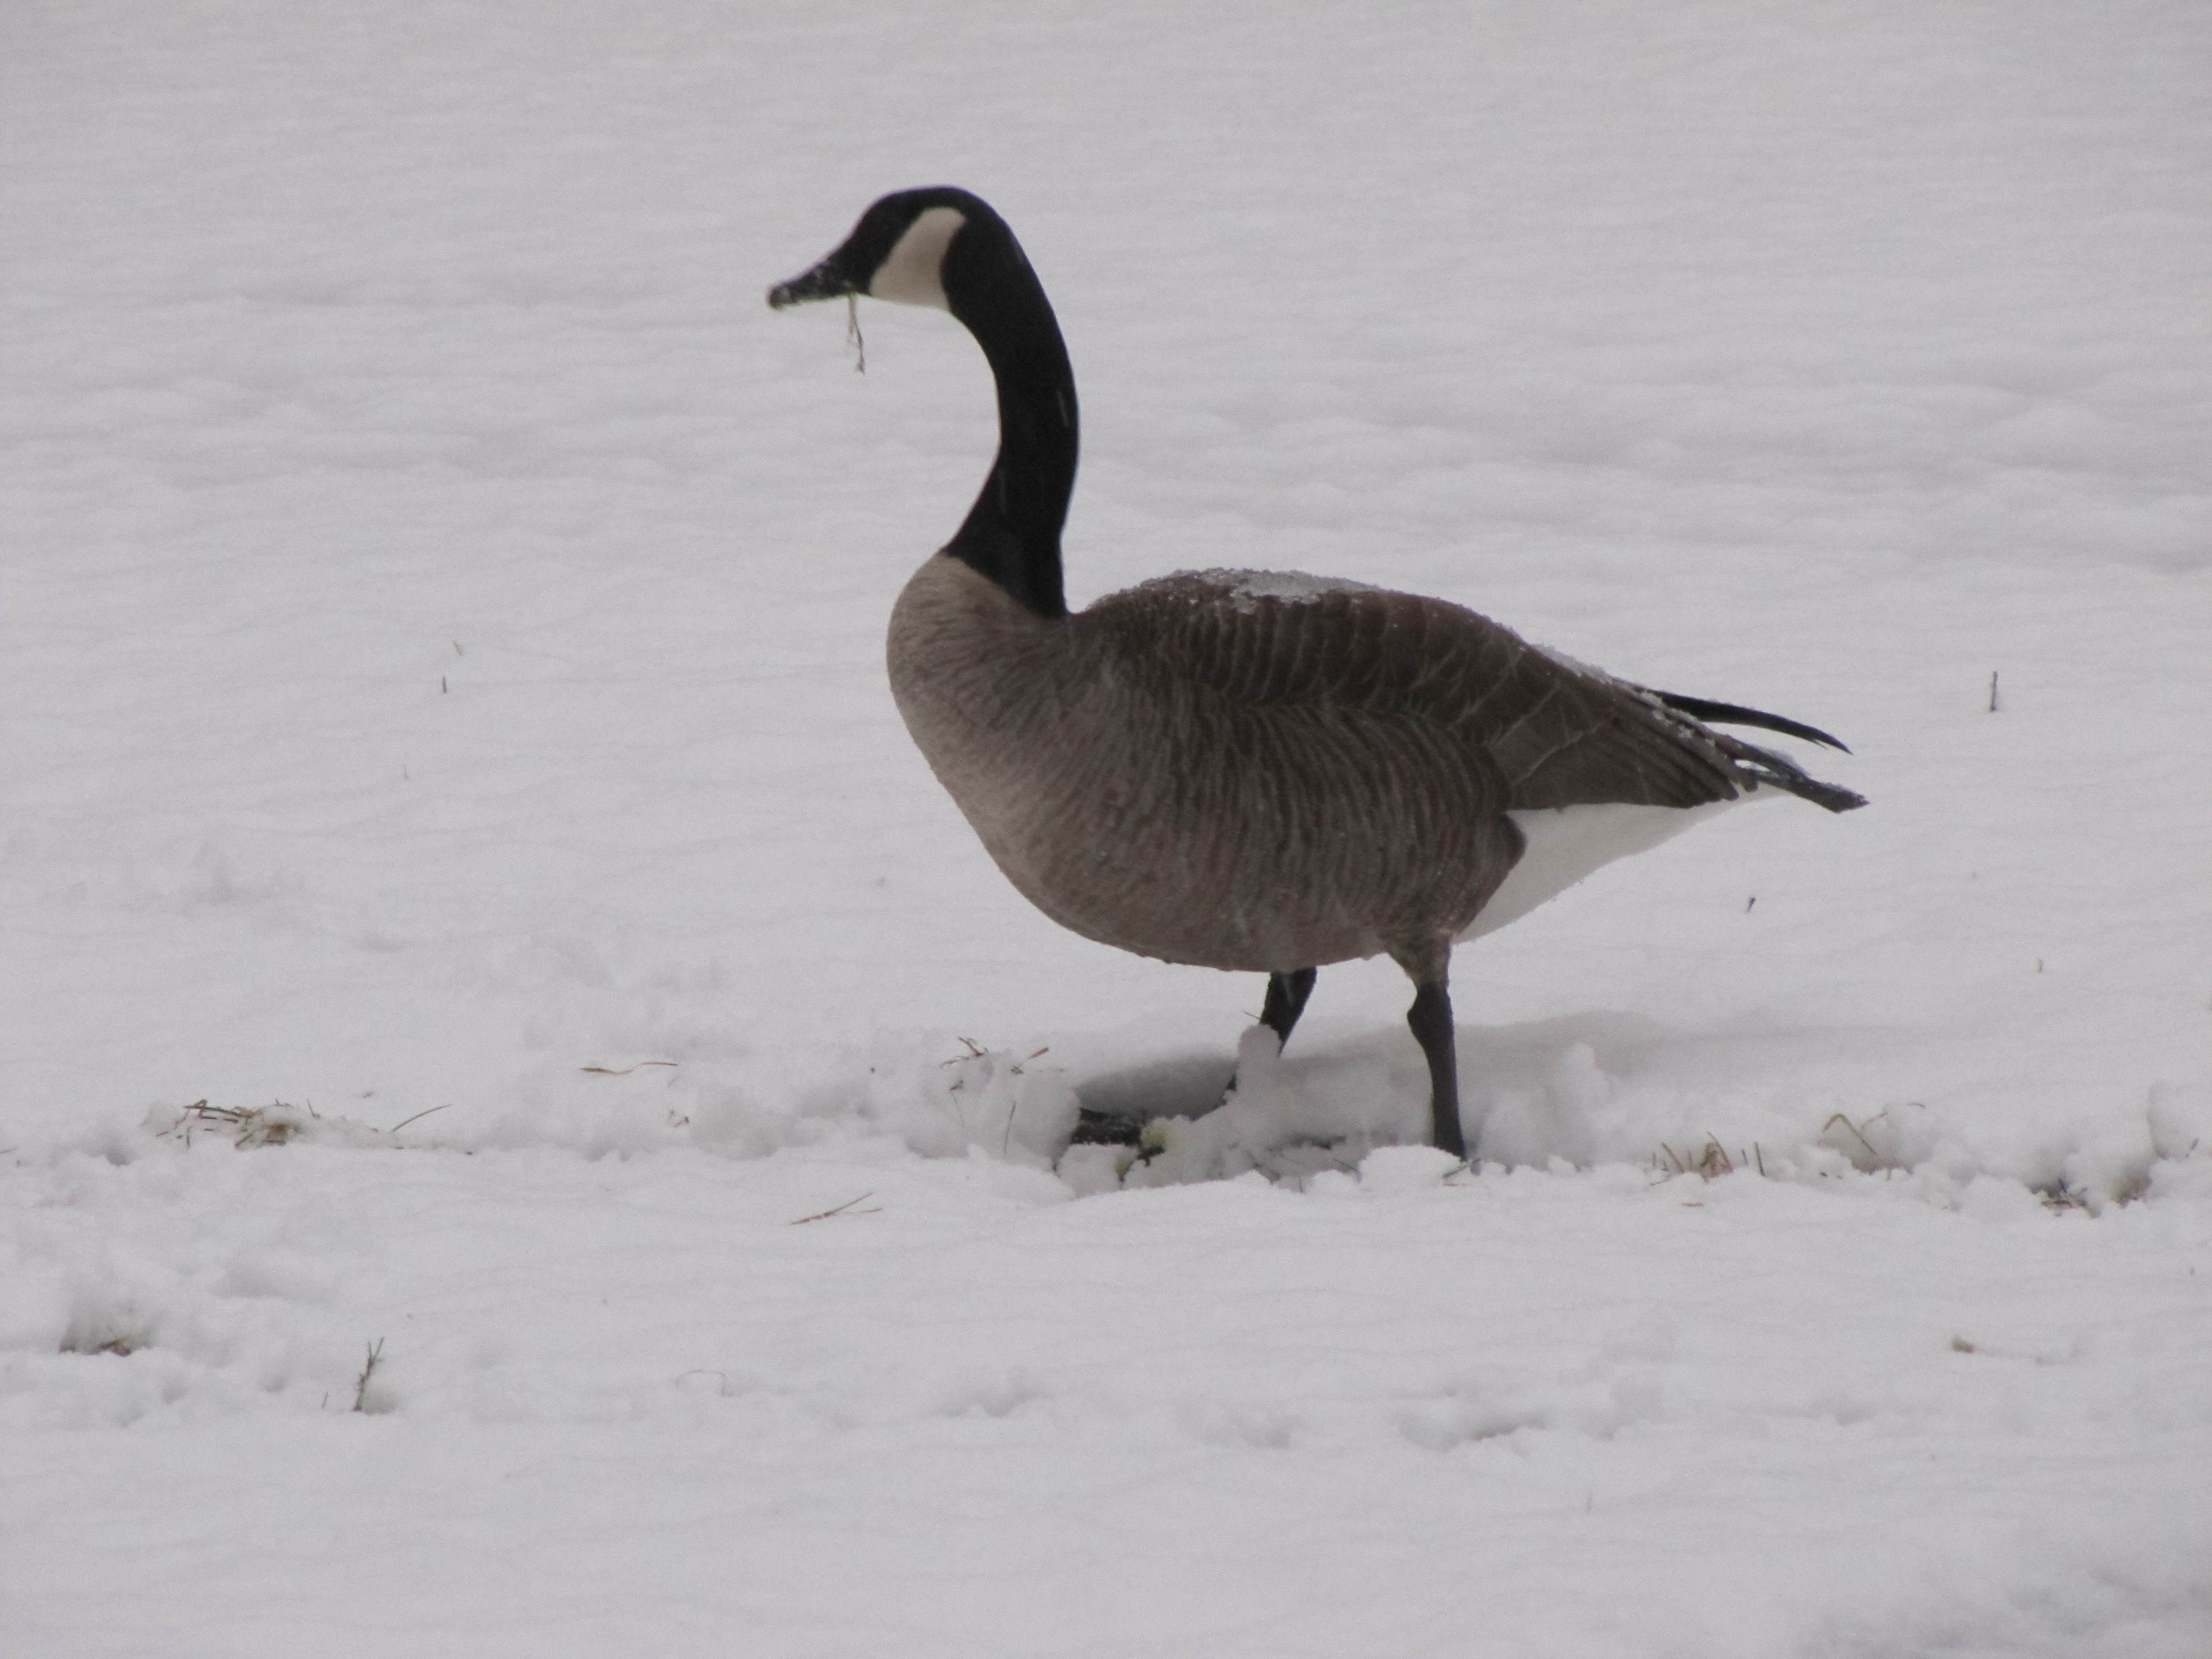 File:Canada Goose in winter.jpg - Wikimedia Commons